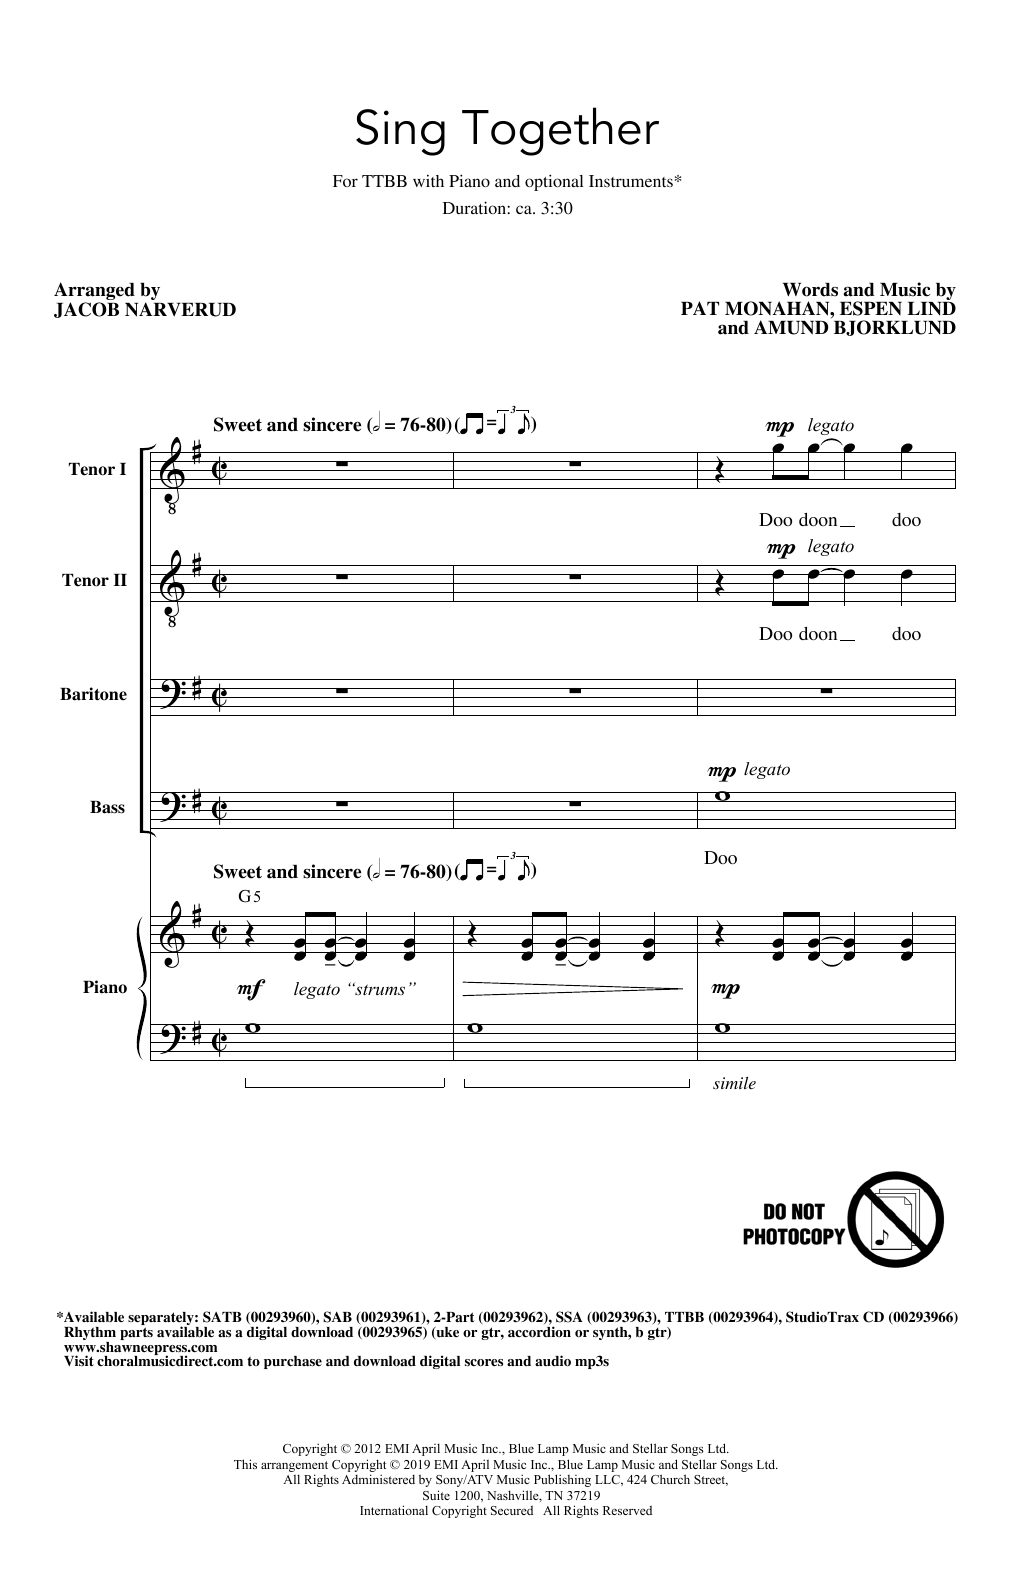 Train Sing Together (arr. Jacob Narverud) Sheet Music Notes & Chords for SATB Choir - Download or Print PDF